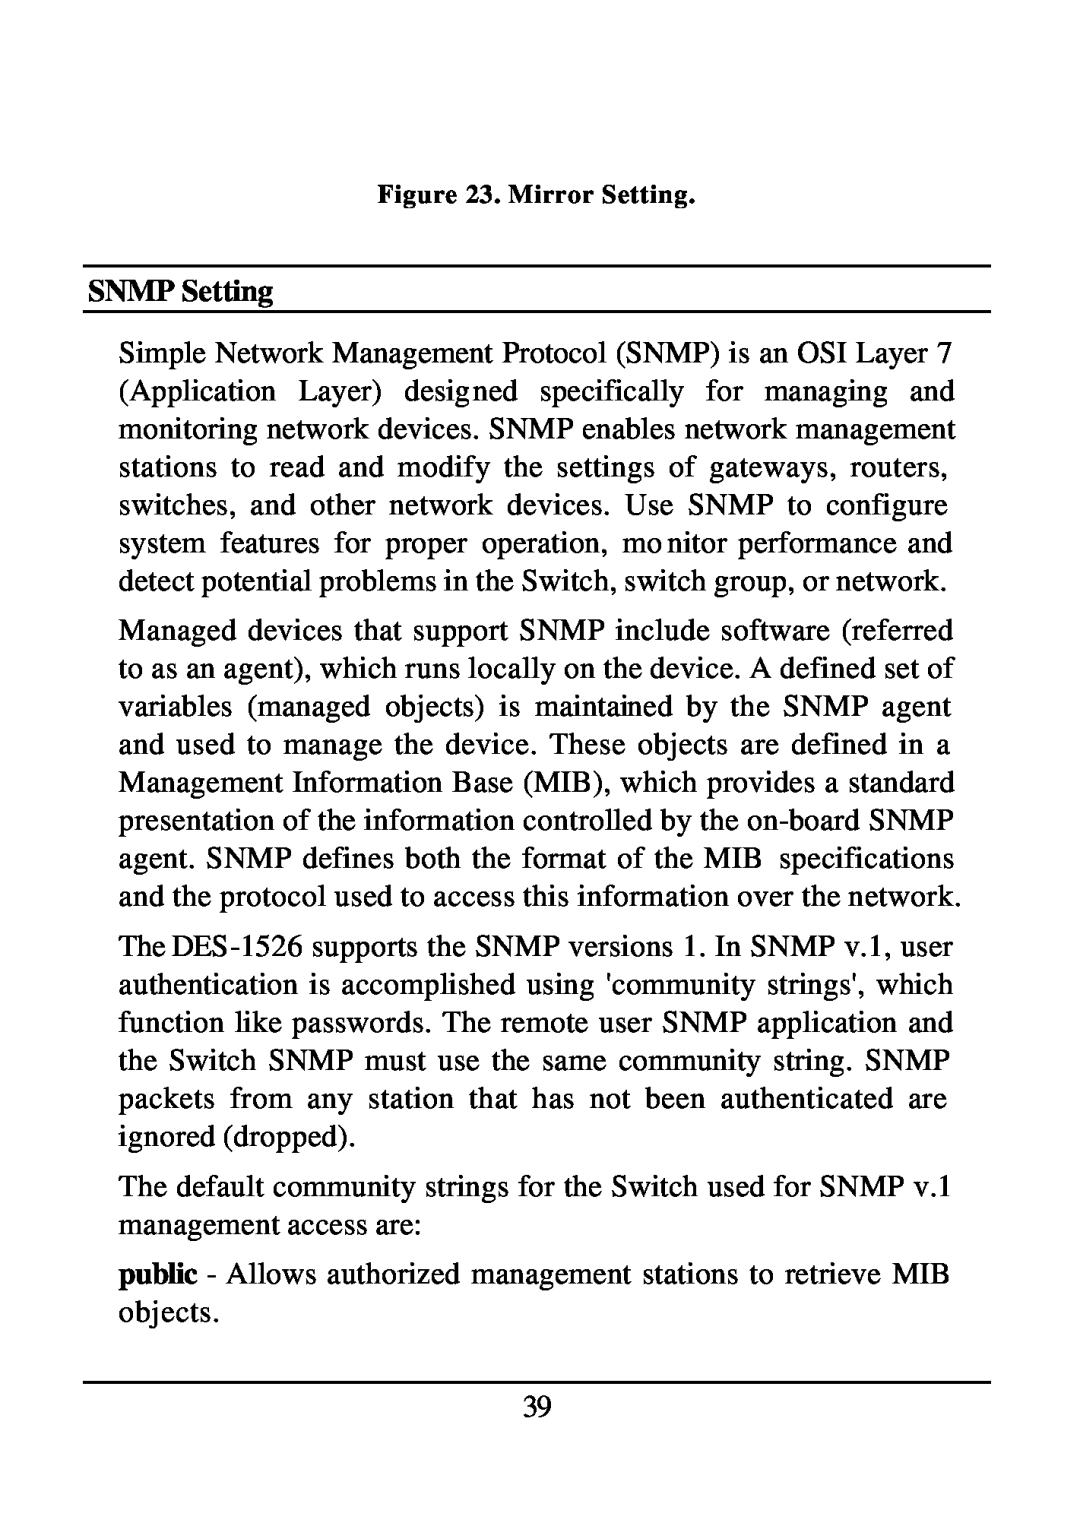 D-Link DES-1526 manual SNMP Setting 